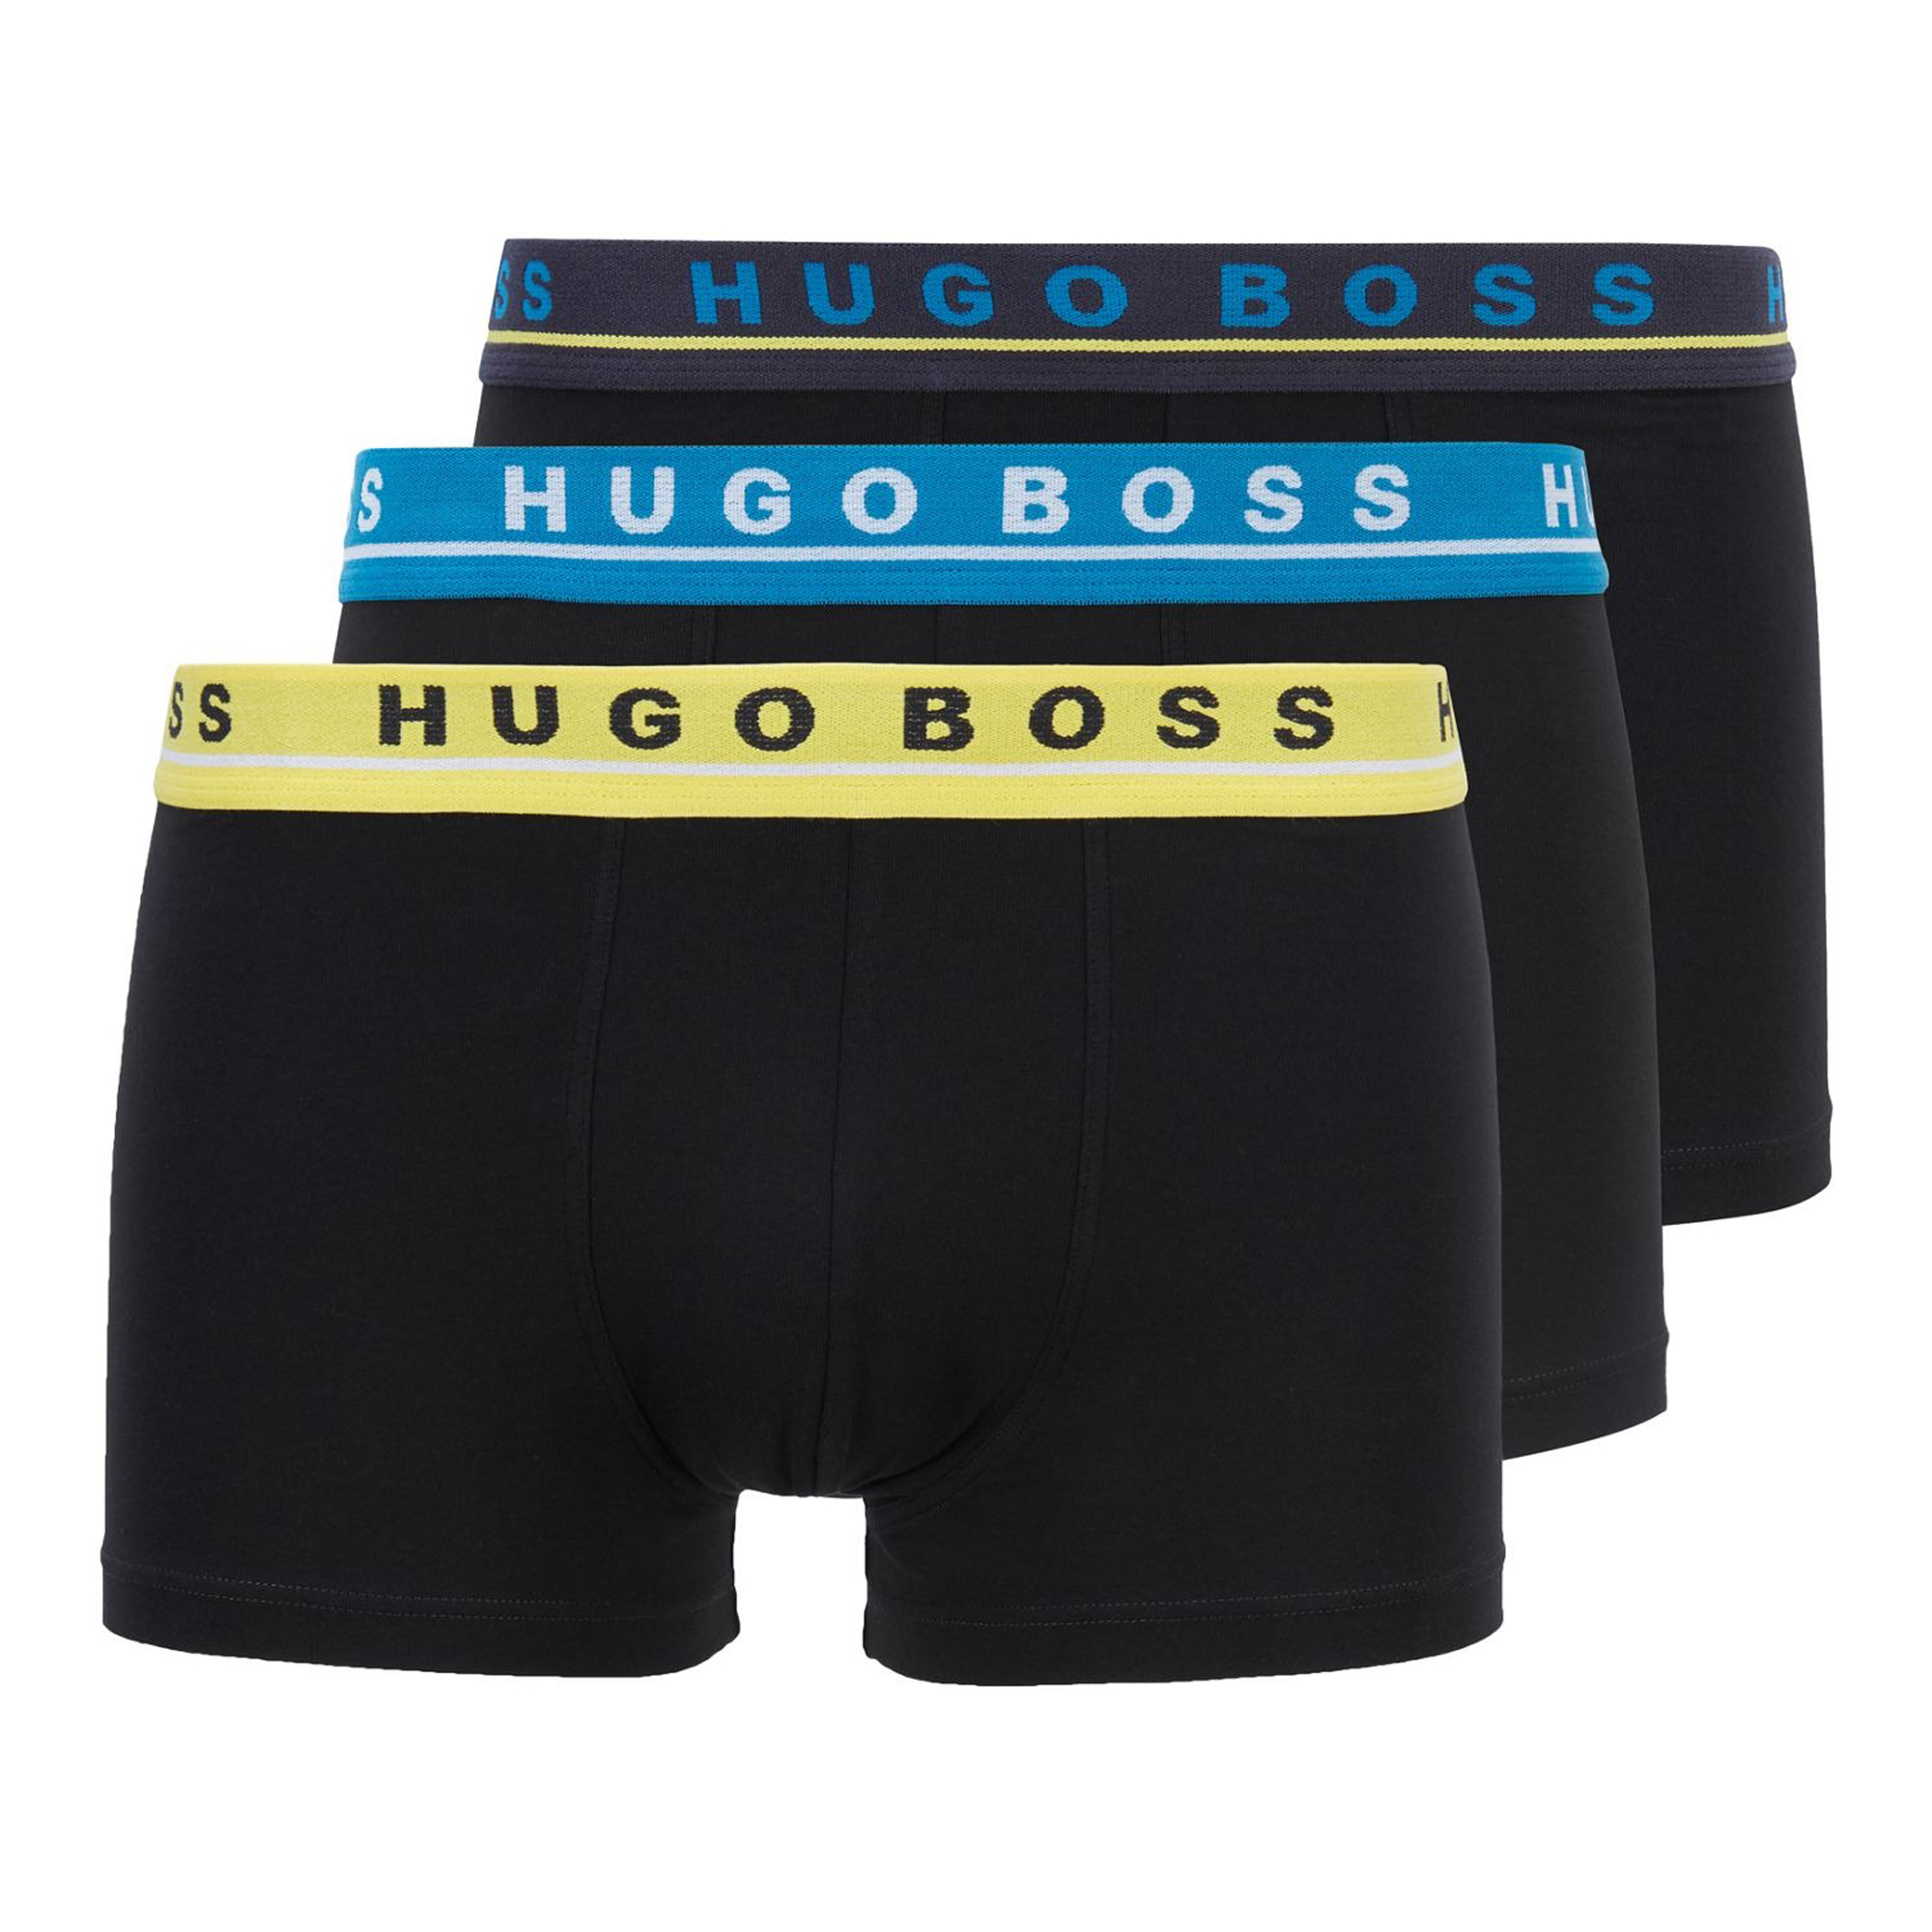 Boxers Hugo Boss Brief Homme (lot de 3)